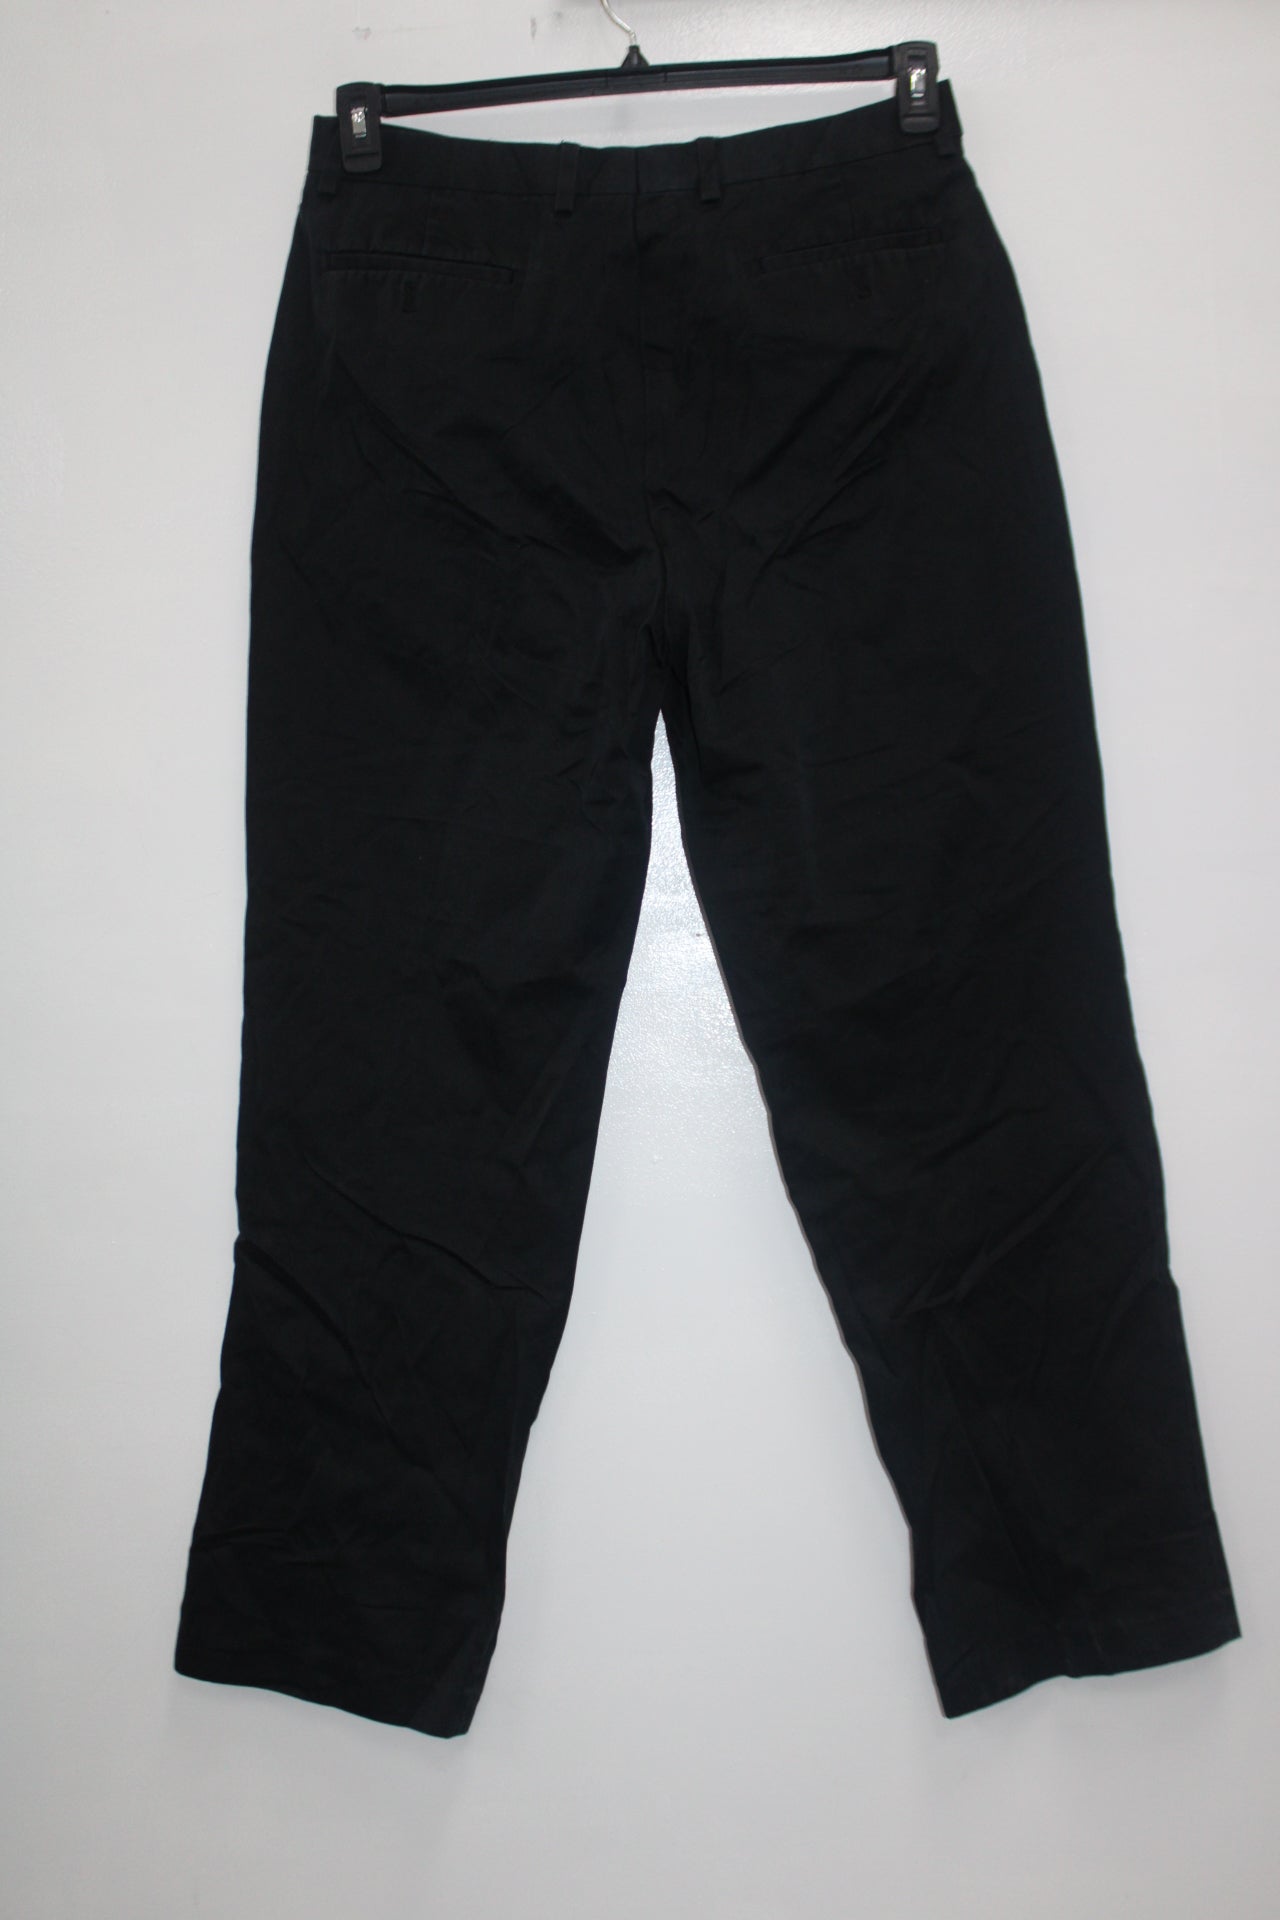 Covington Men's Pants Classic Black 36x34 Pre-Owned